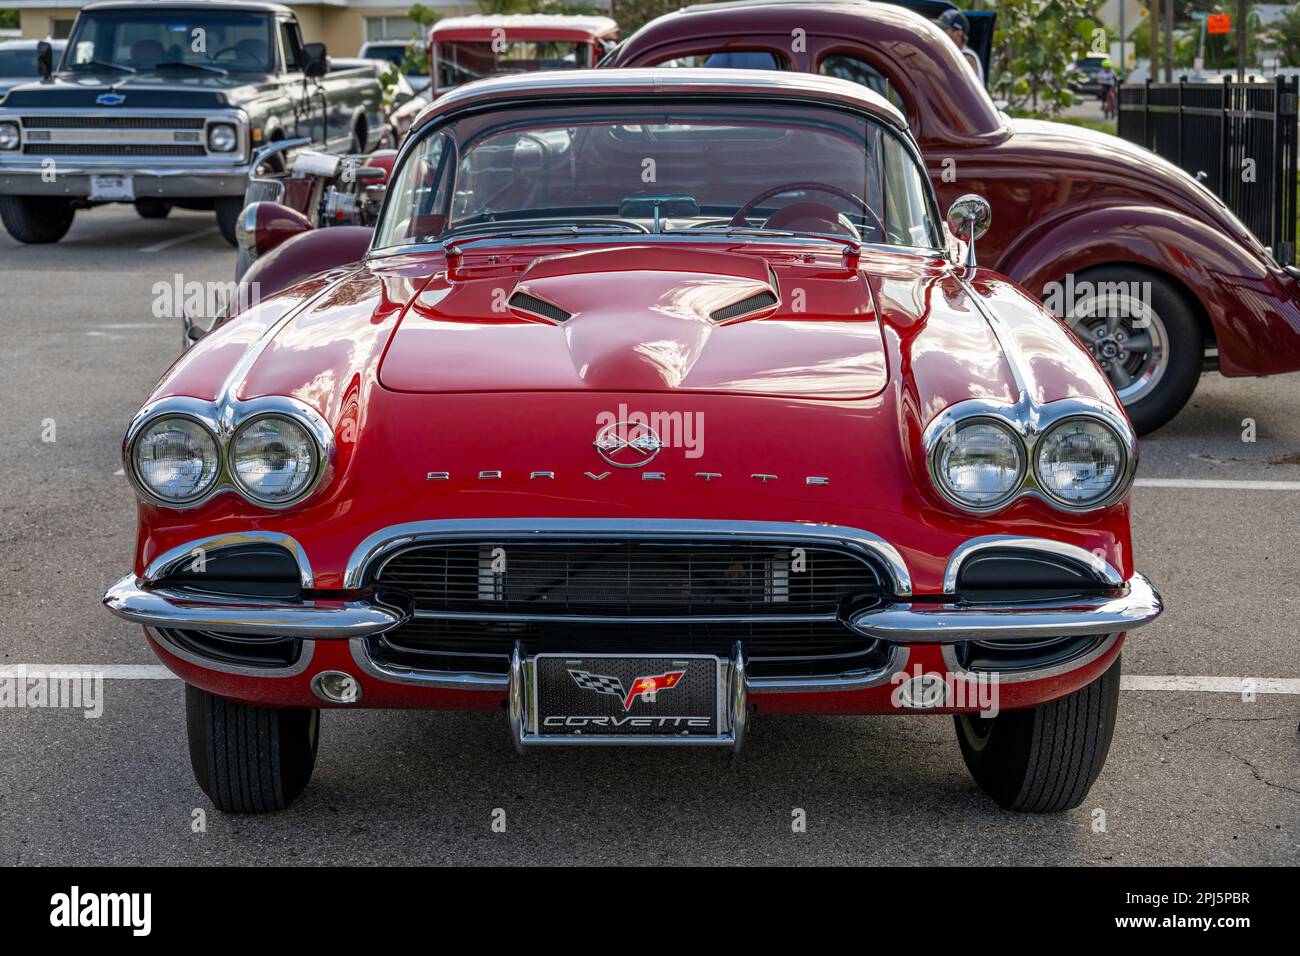 Red Corvette American Sports Car Foto Stock